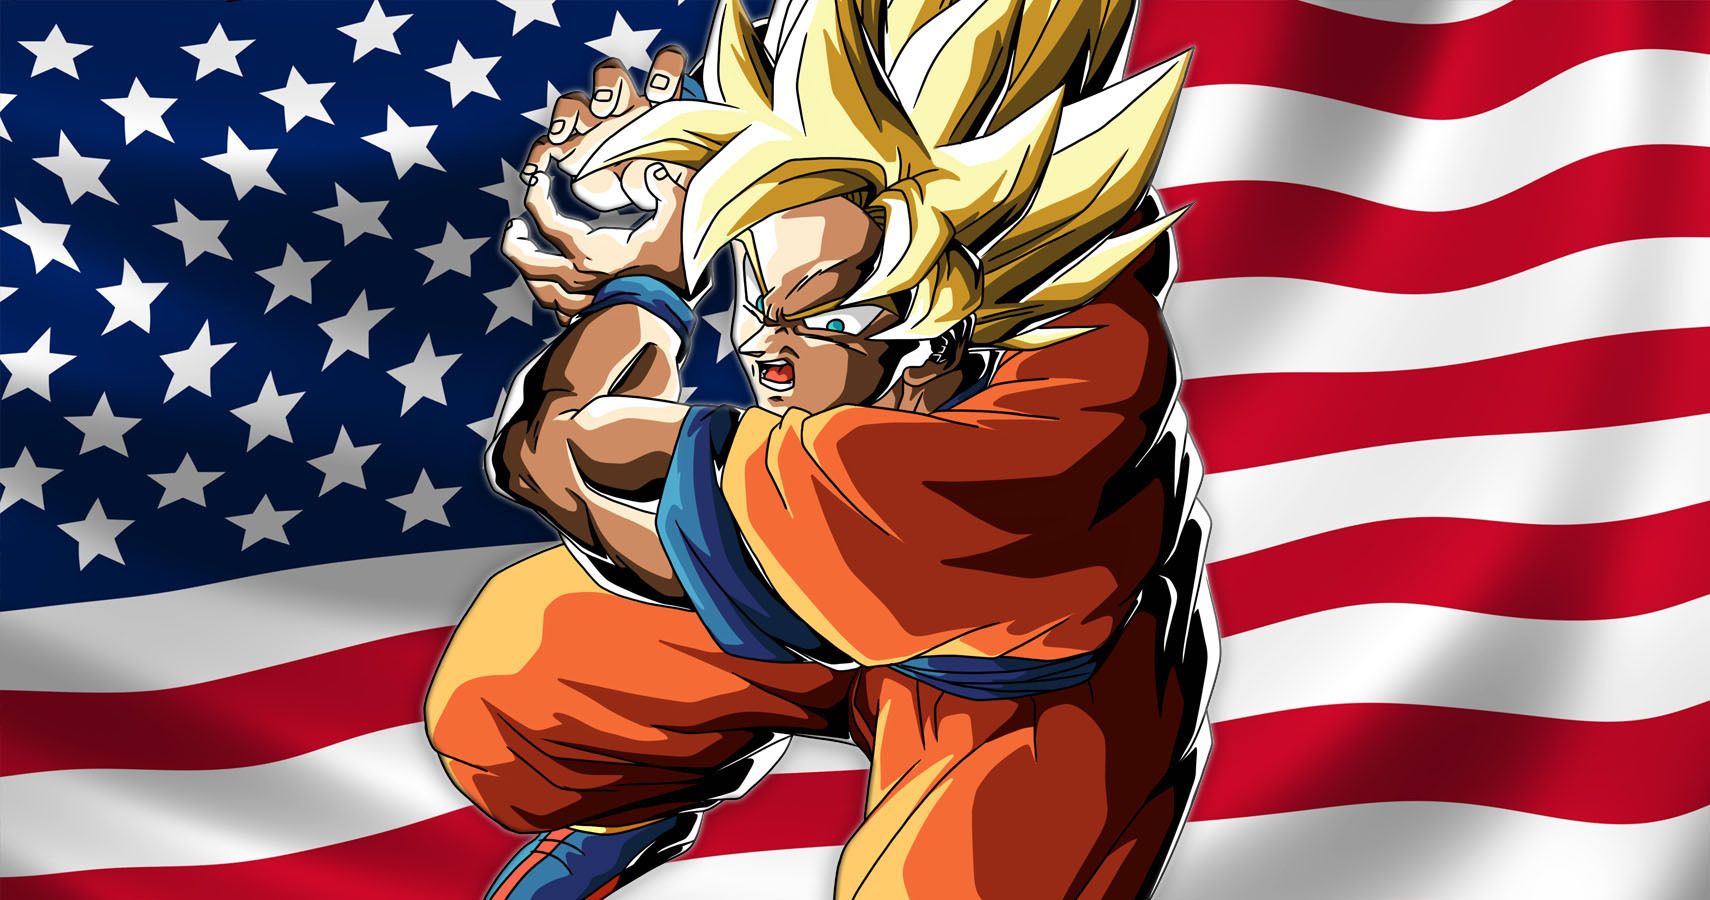 Super Saiyan Goku from Dragon Ball against an American flag